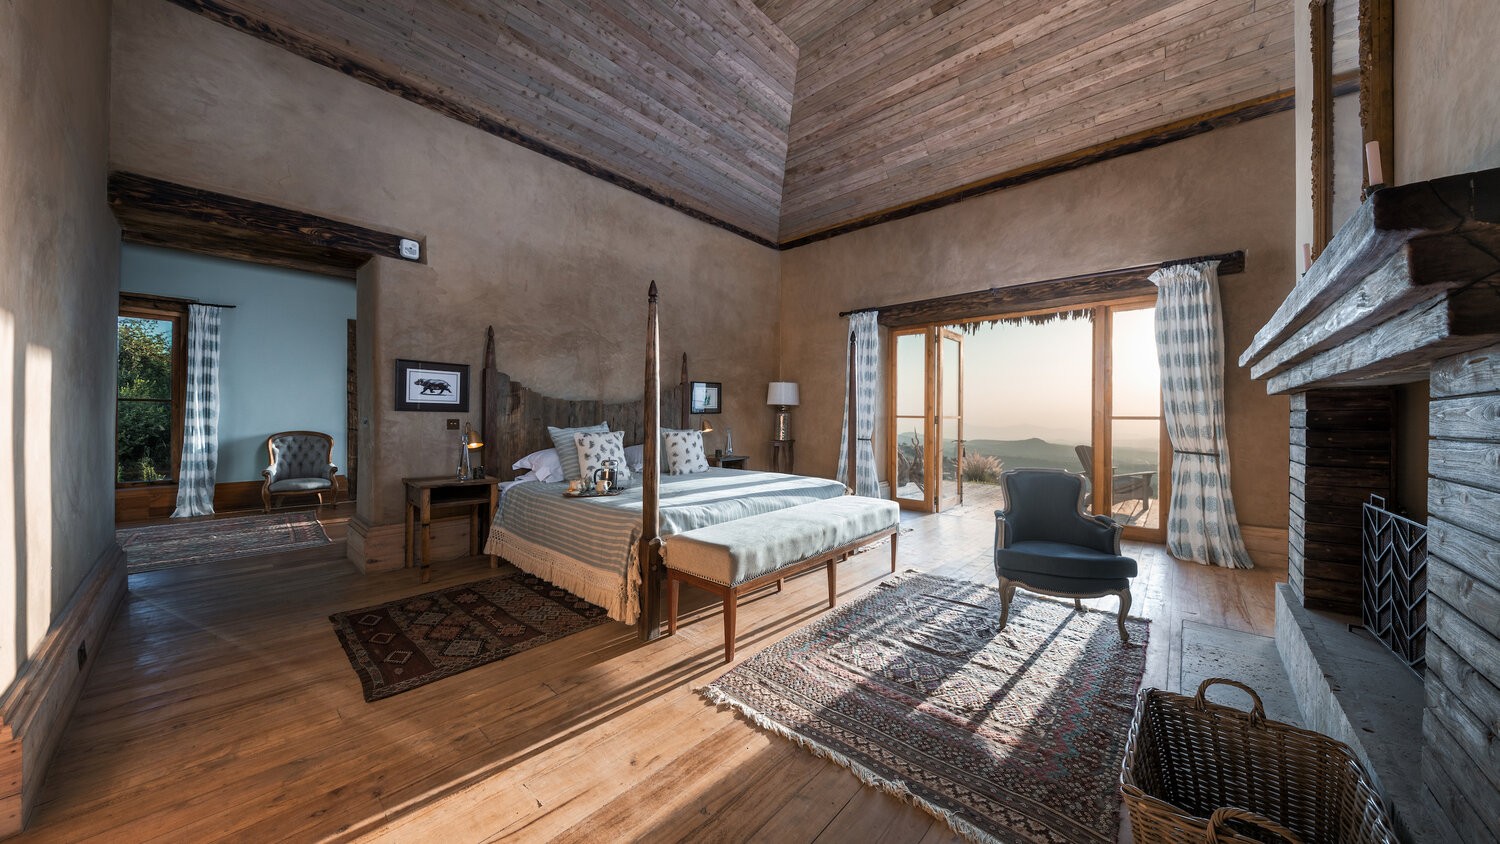 Lengishu House: Inside Luxurious Retreat Charging Ksh850,000 Per Night